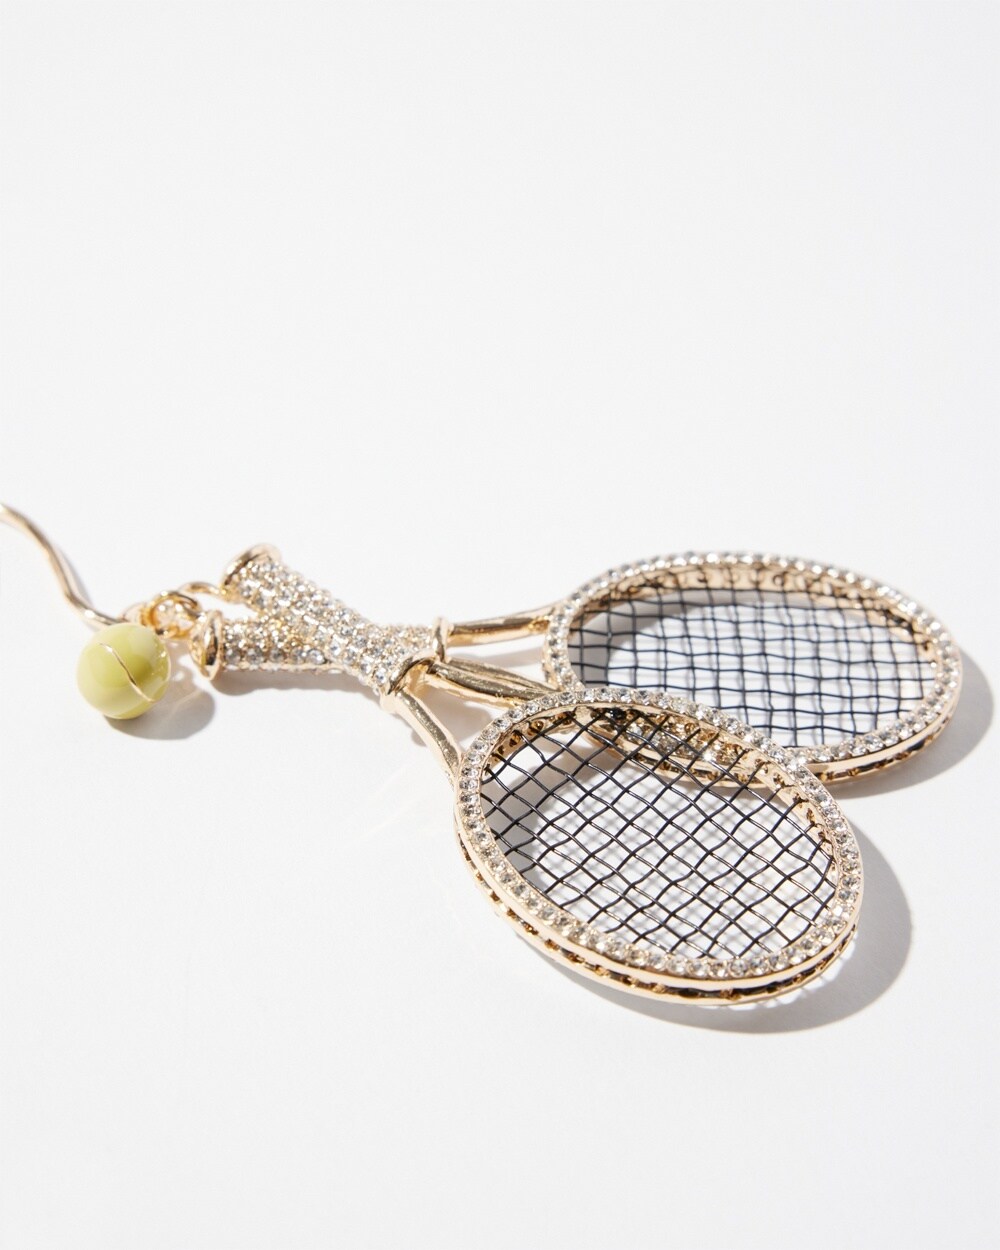 Gold Tone Tennis Racket Ornament